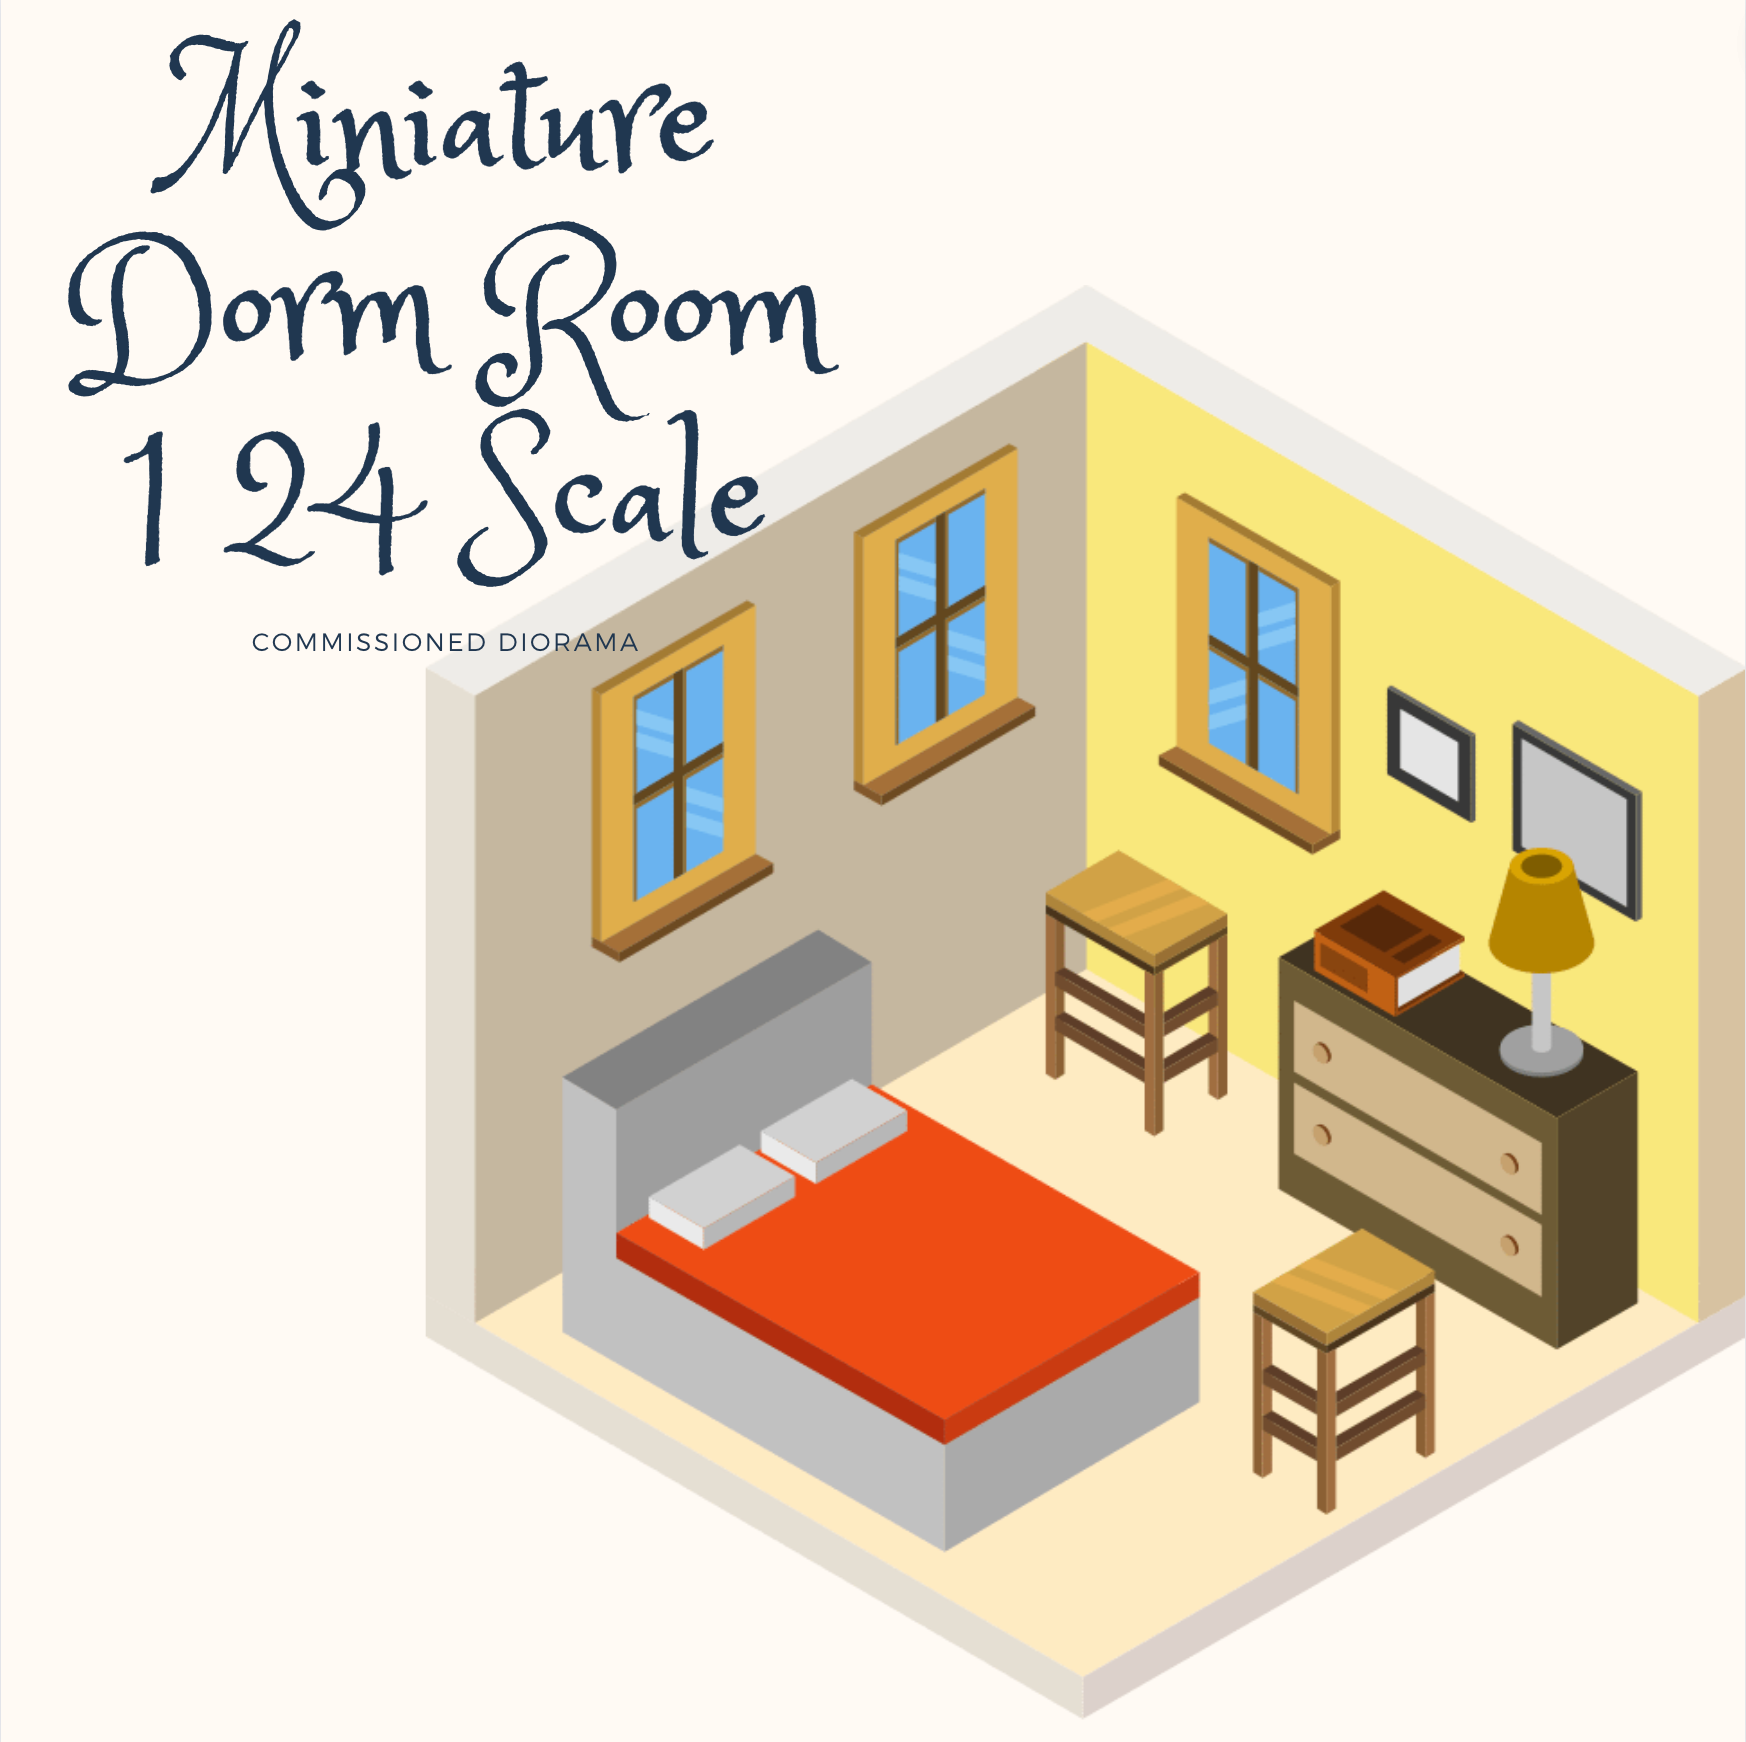 Dorm Room Diorama